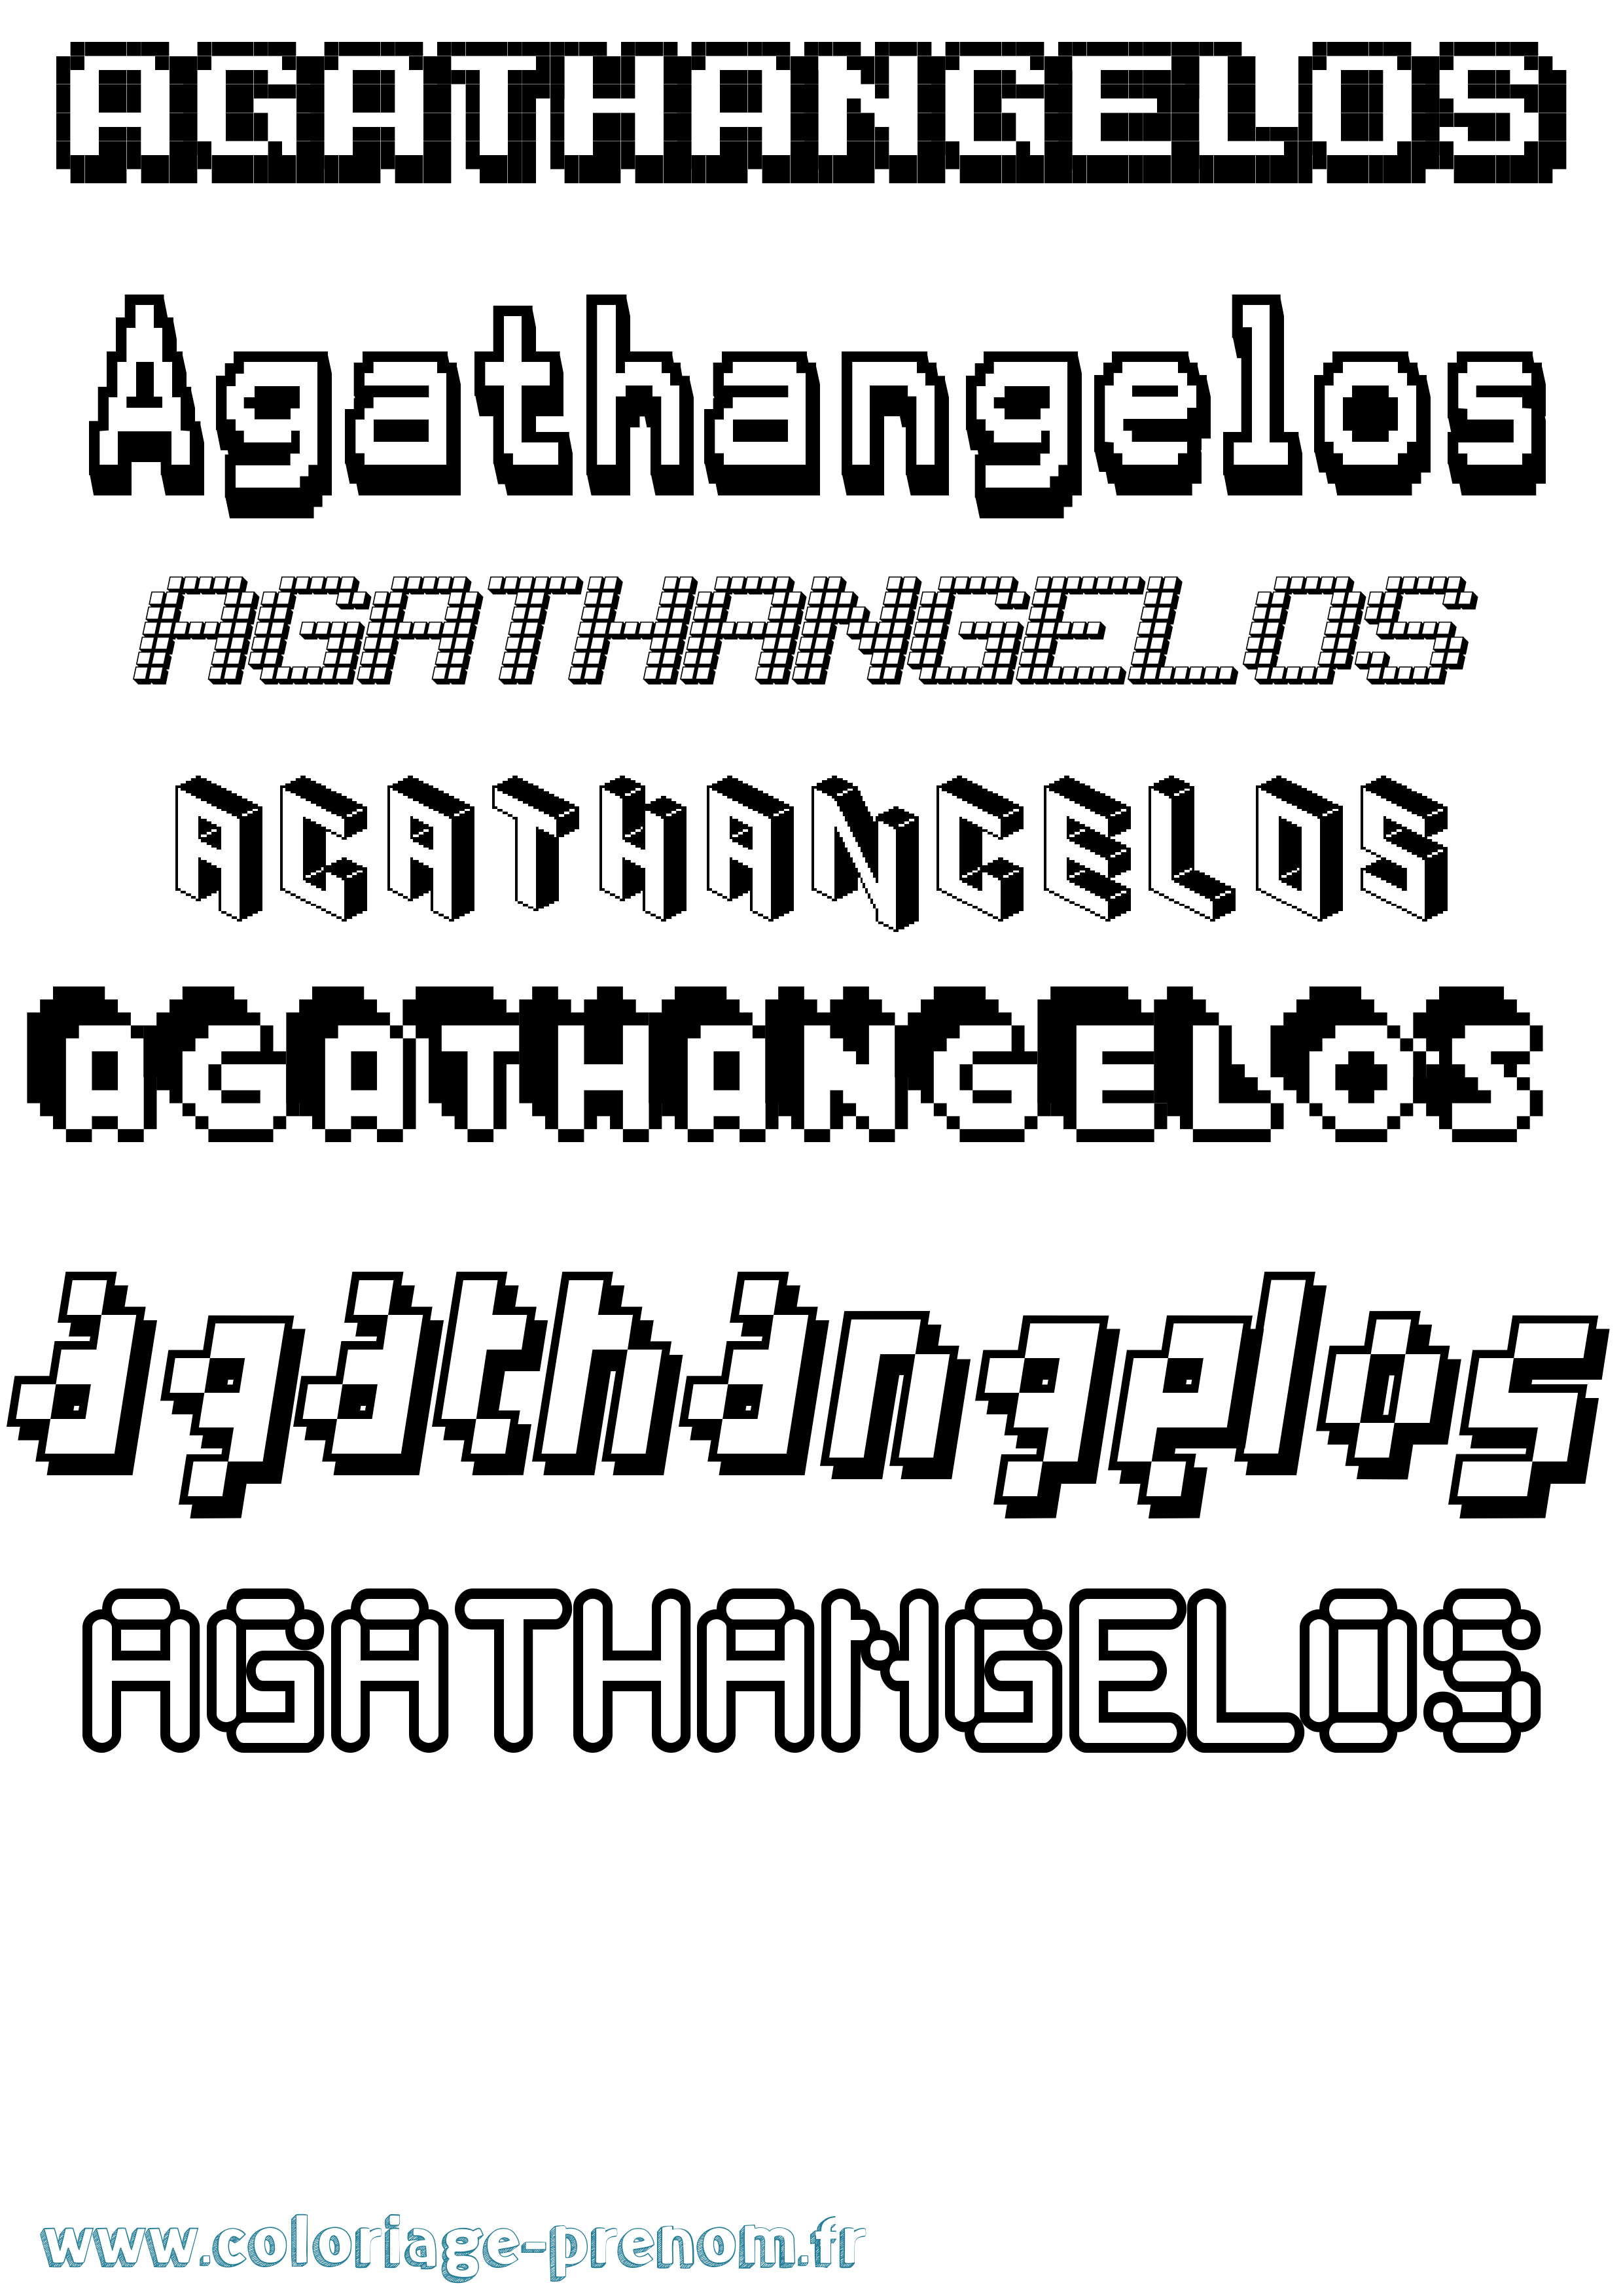 Coloriage prénom Agathangelos Pixel